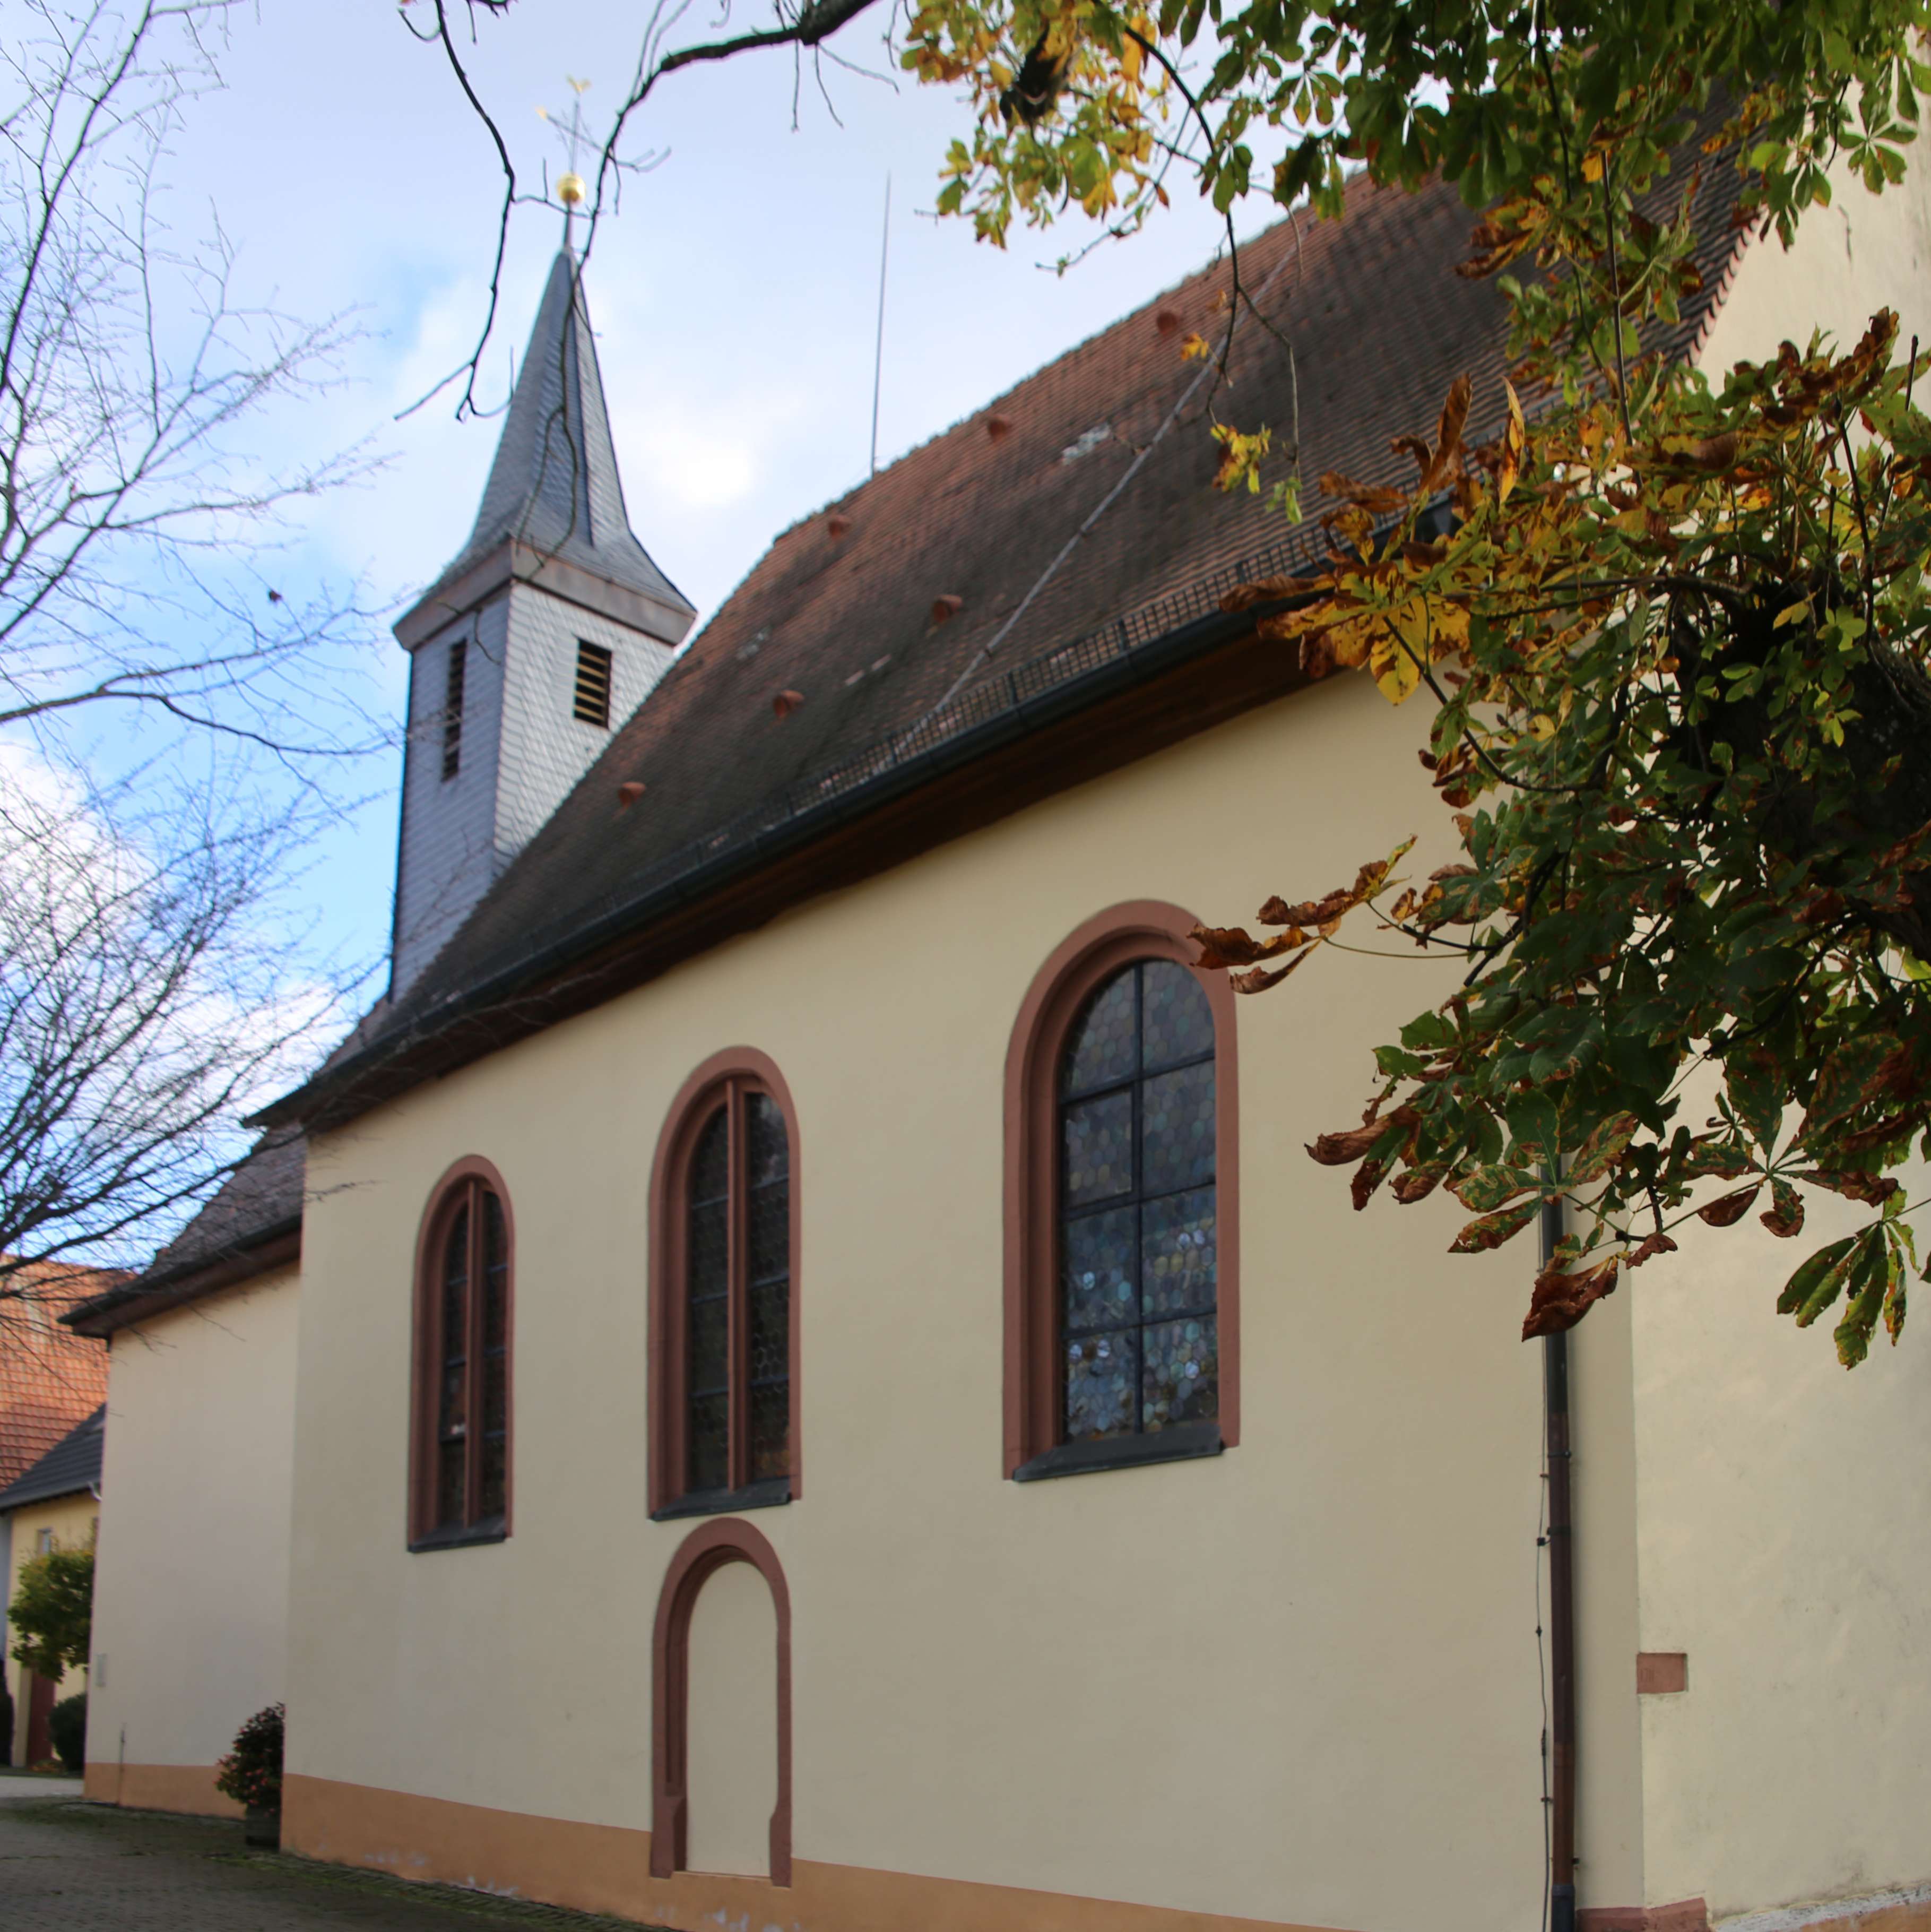                                                     St. Jakobus Eichelberg                                    